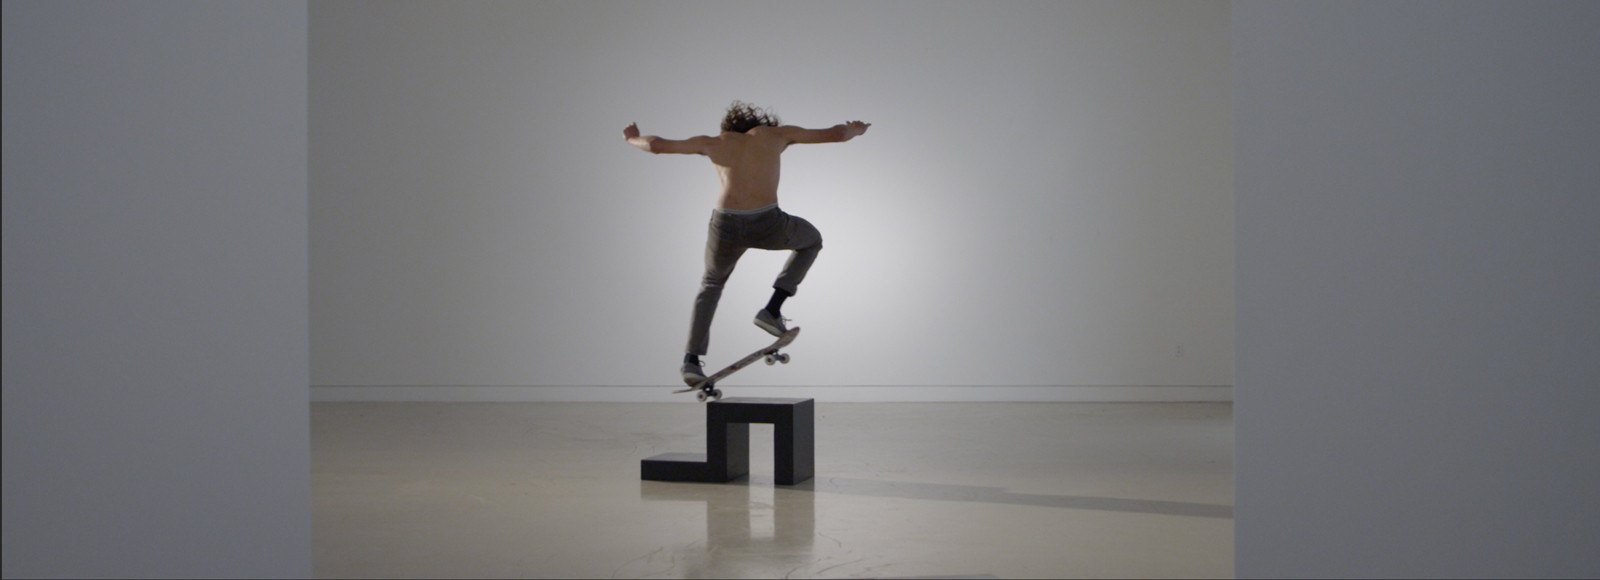 Shaun Gladwell, Jesus Esteban in ‘Skateboarders vs Minimalism’, video still, 2016